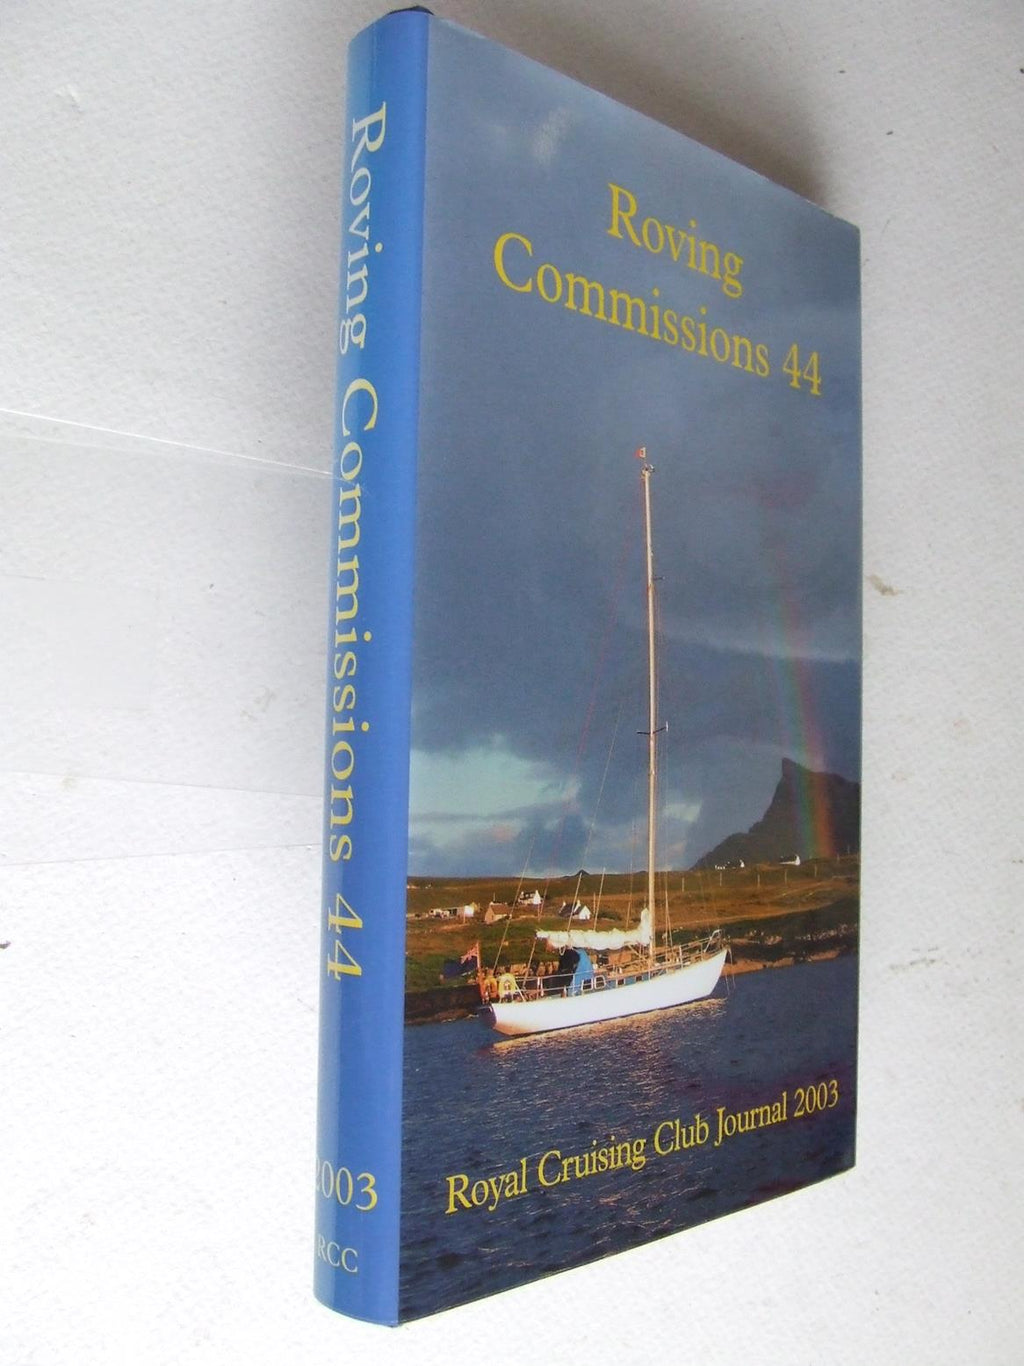 Roving Commissions 44 / Royal Cruising Club Journal 2003